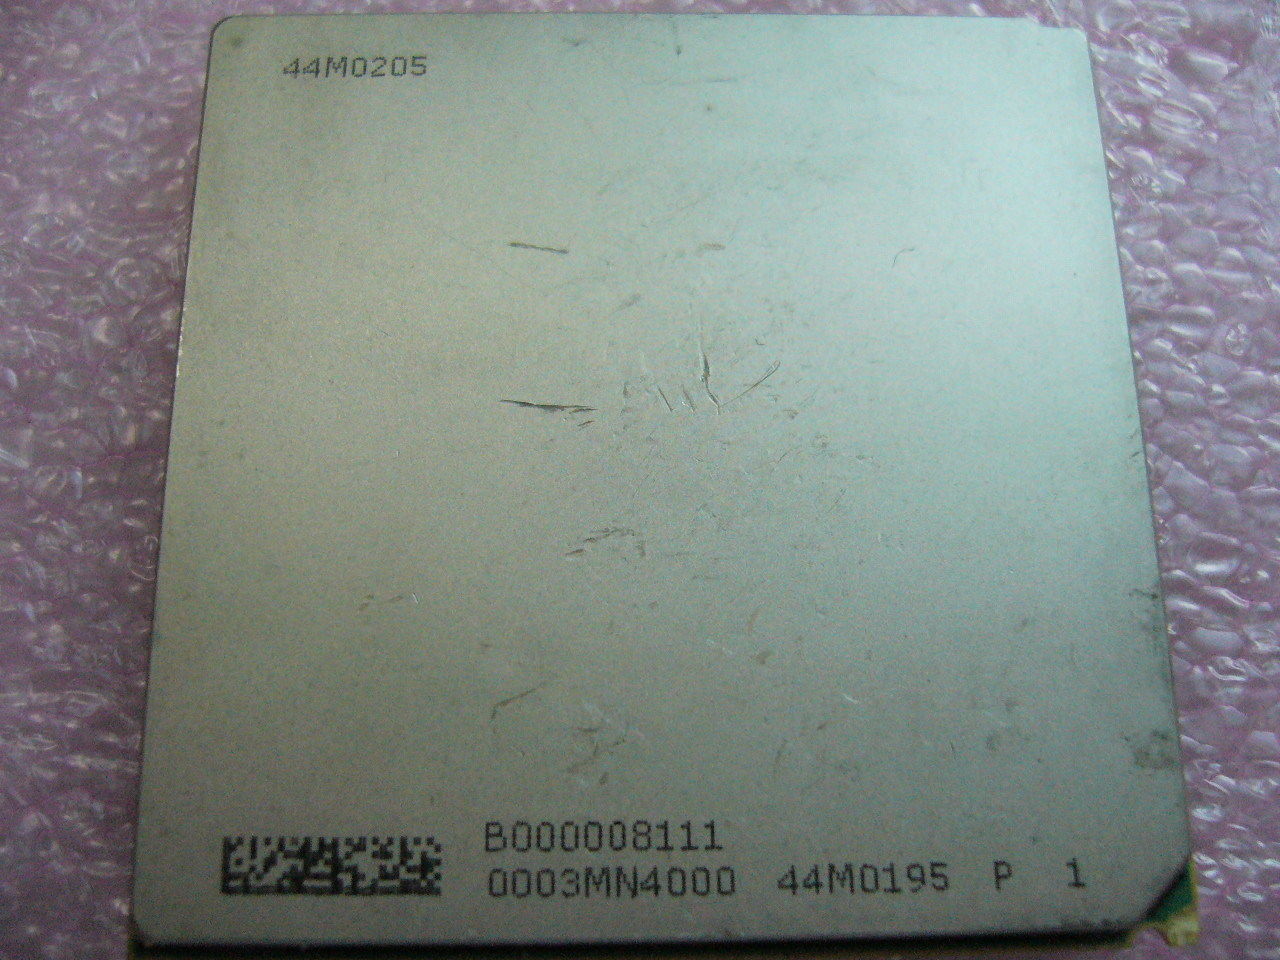 IBM Processor 44M0205, 44M0195 LGA2295